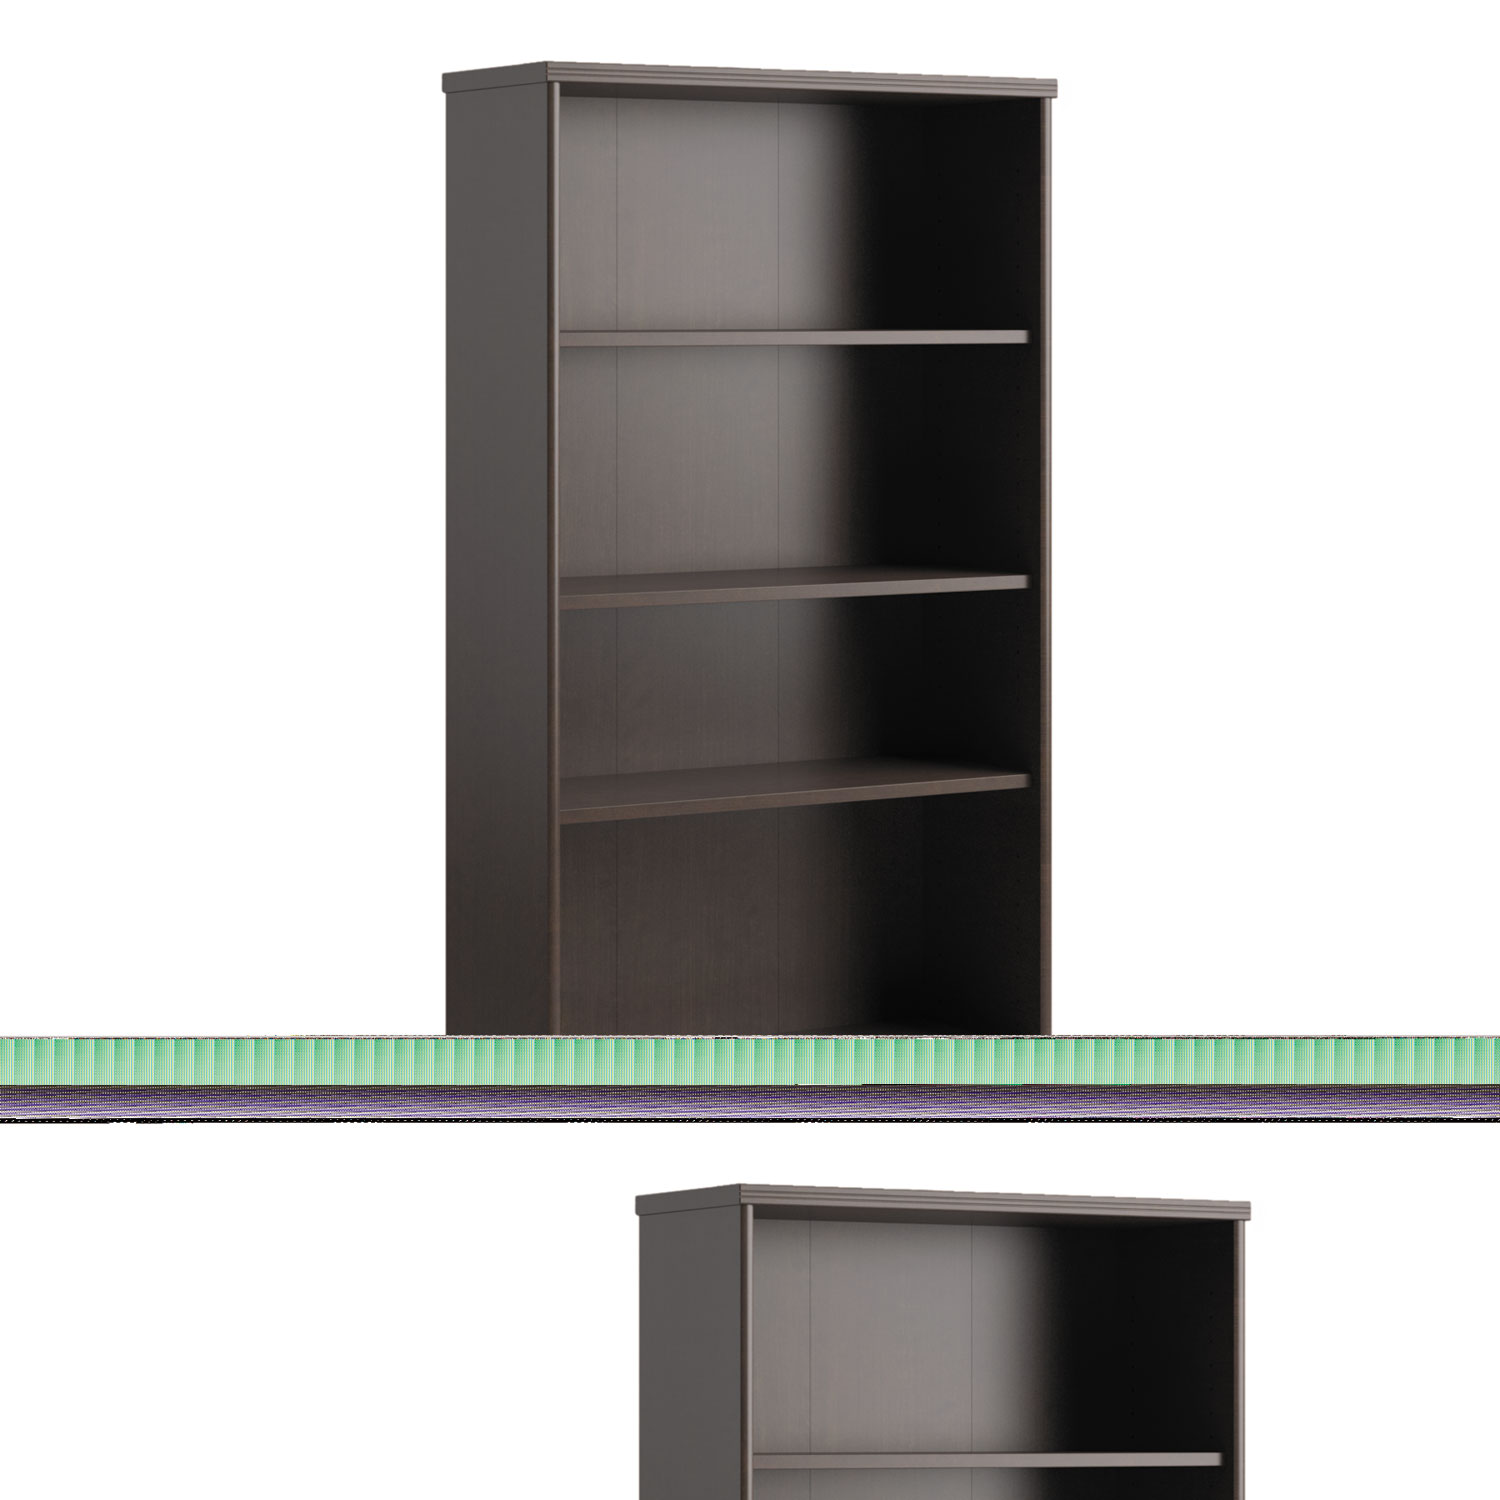  Bush PR76865 Envoy Series Five-Shelf Bookcase, 29 7/8w x 11 3/4d x 66 3/8h, Mocha Cherry (BSHPR76865) 